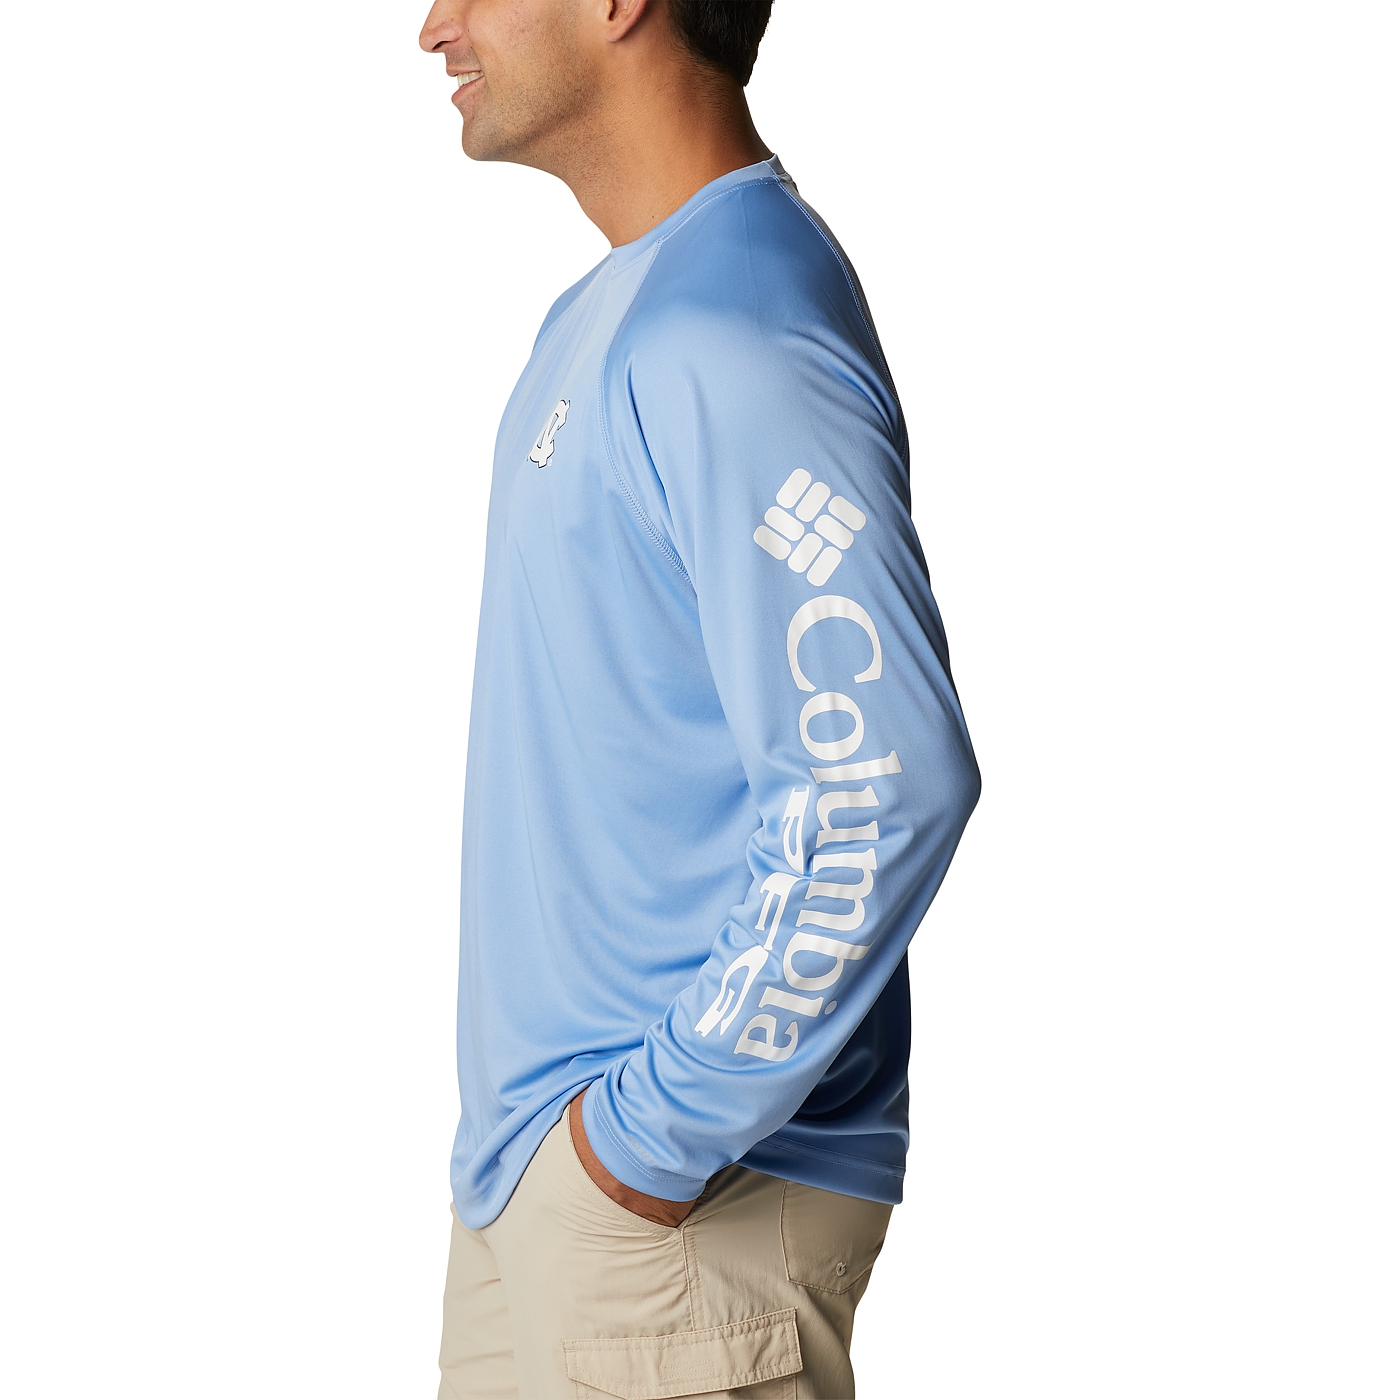 Johnny T-shirt - North Carolina Tar Heels - Long Sleeve Terminal Tackle Sun  Shirt (CB) by Columbia Sportswear